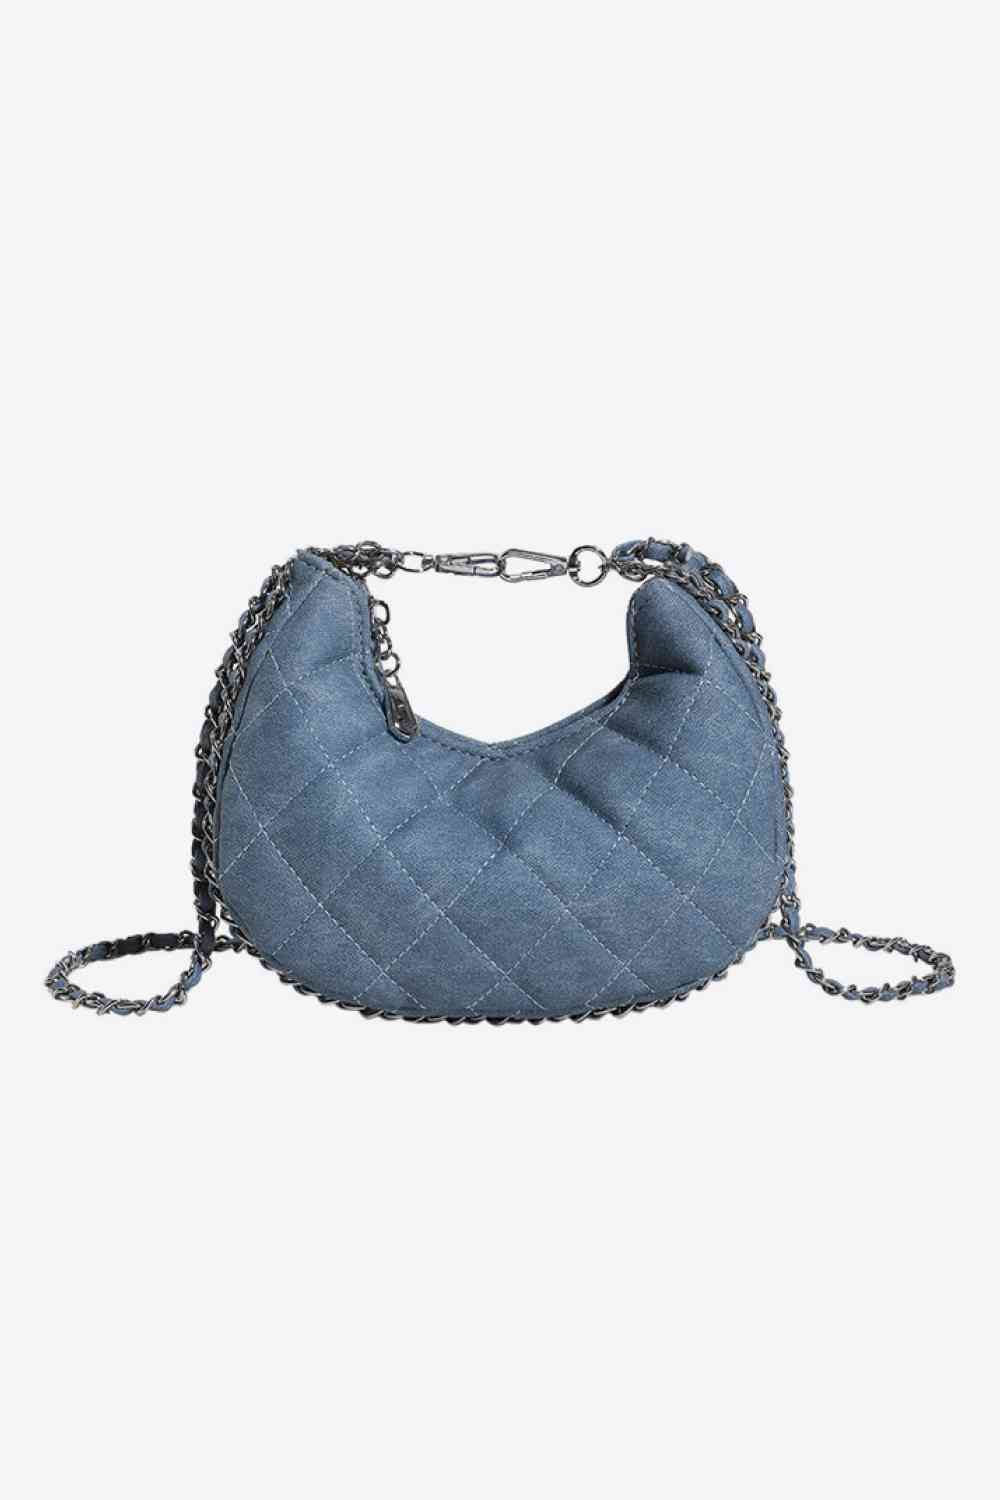 PU Leather Handbag - Sky Blue / One Size - Women Bags & Wallets - Handbags - 15 - 2024